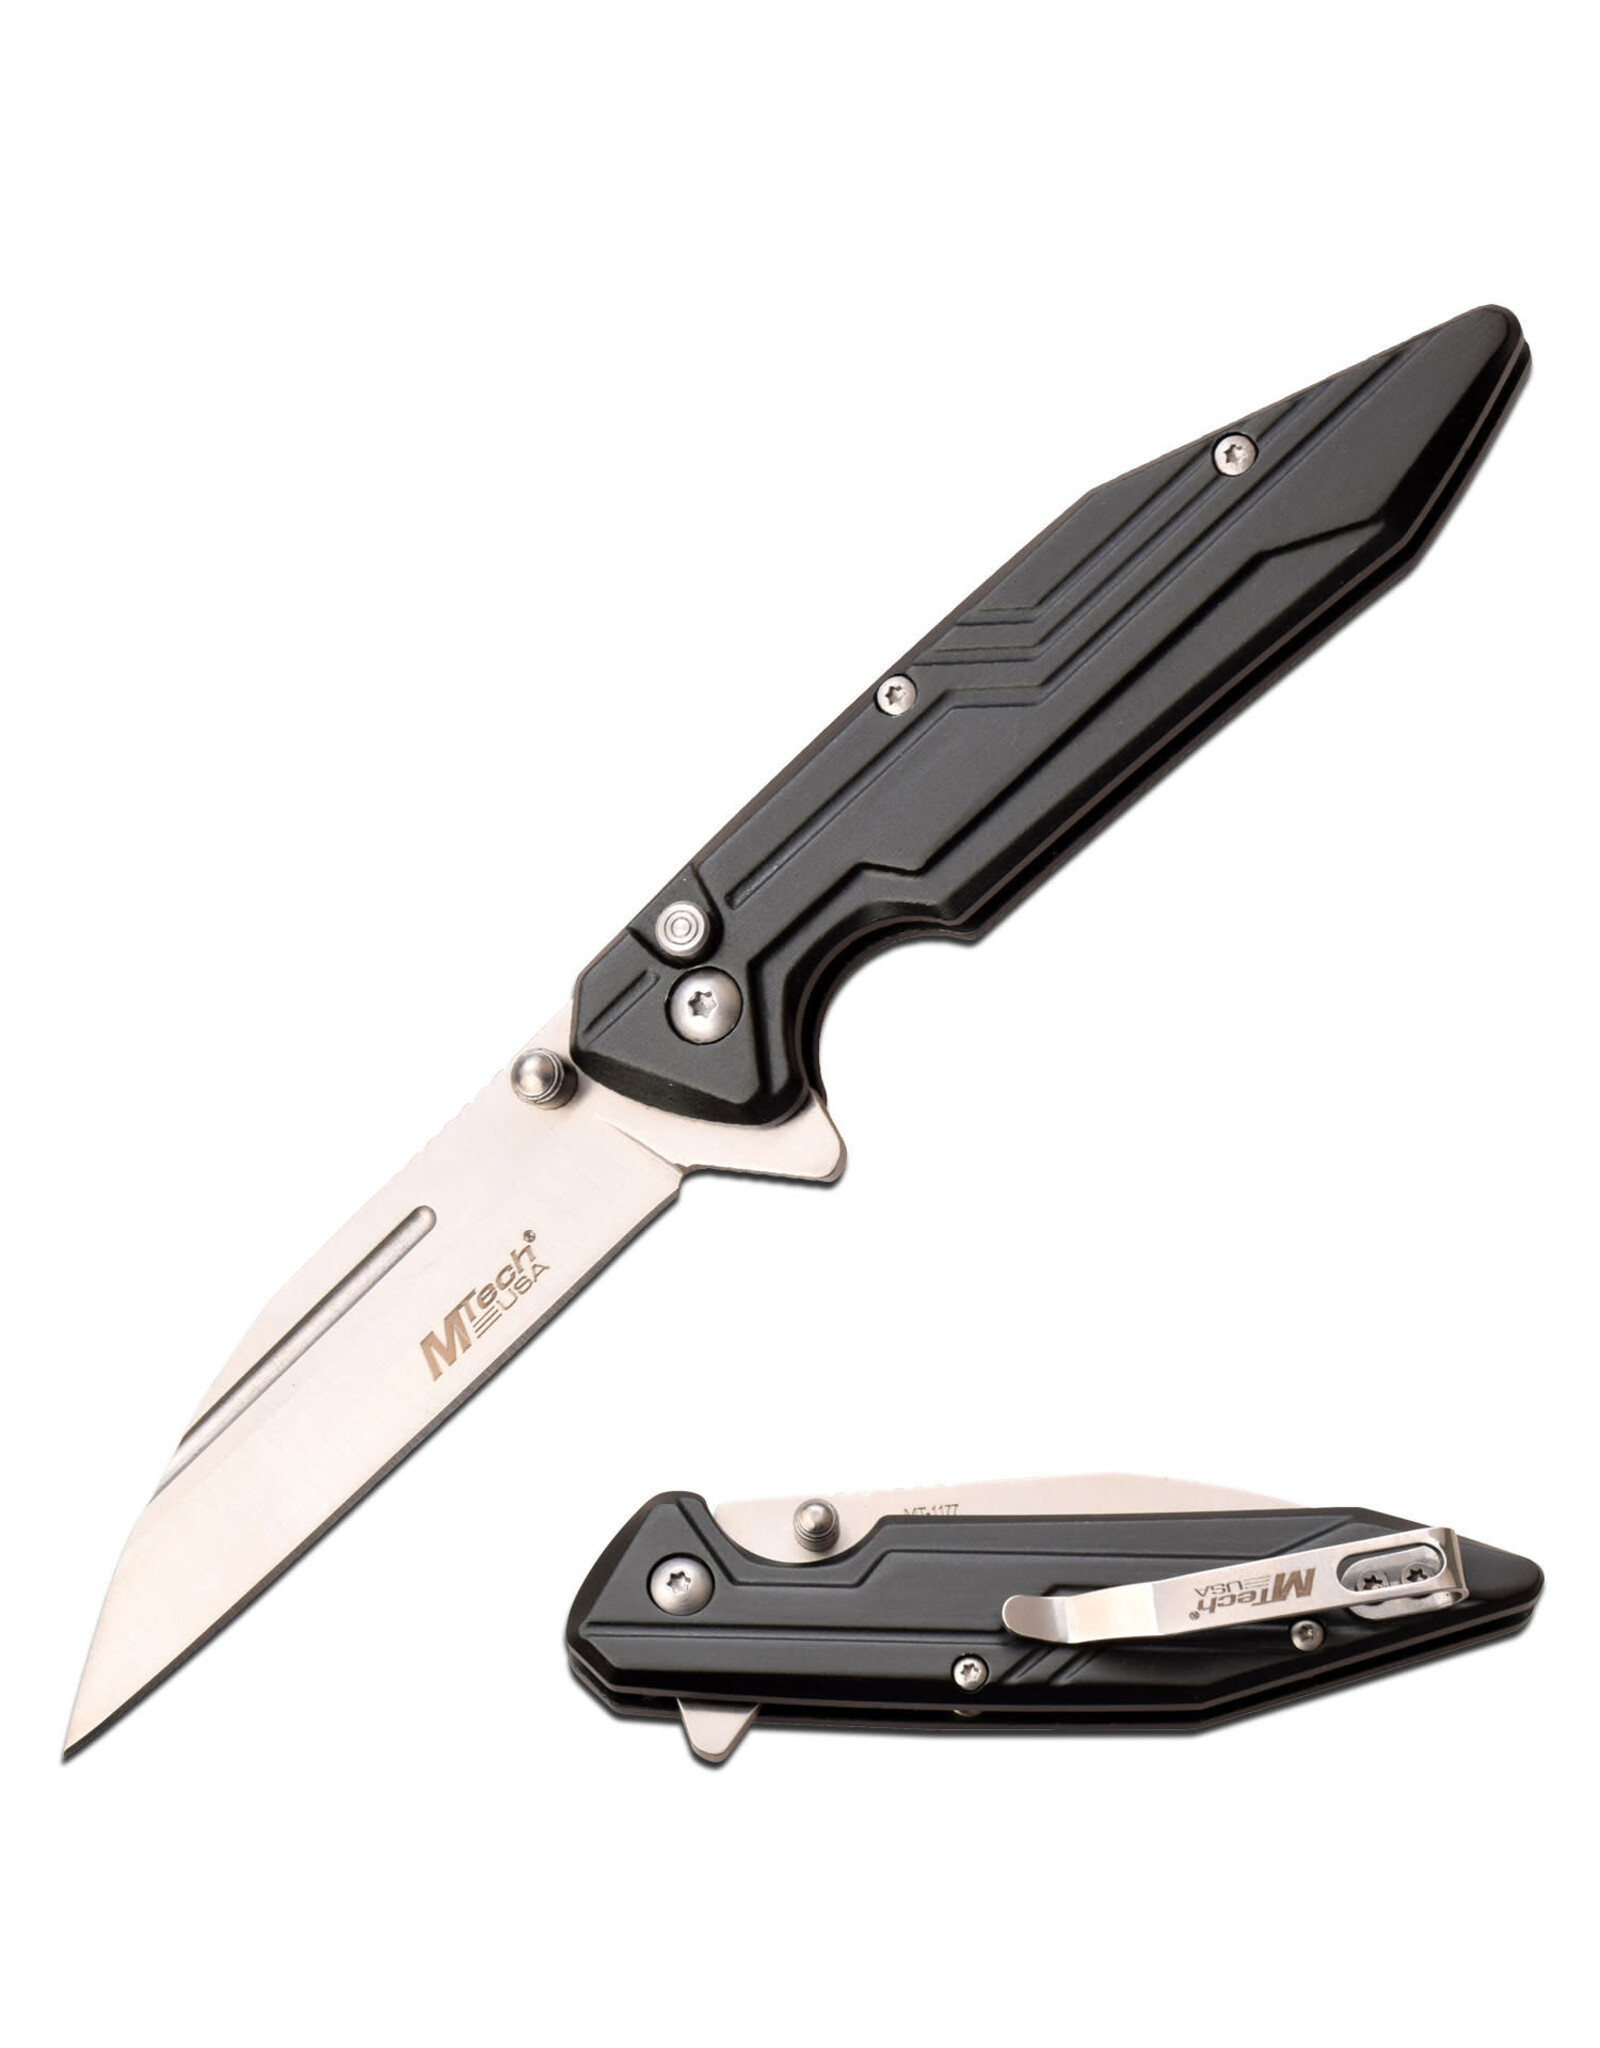 MTech Usa MTech USA - Folding Knife - MT-1177BK